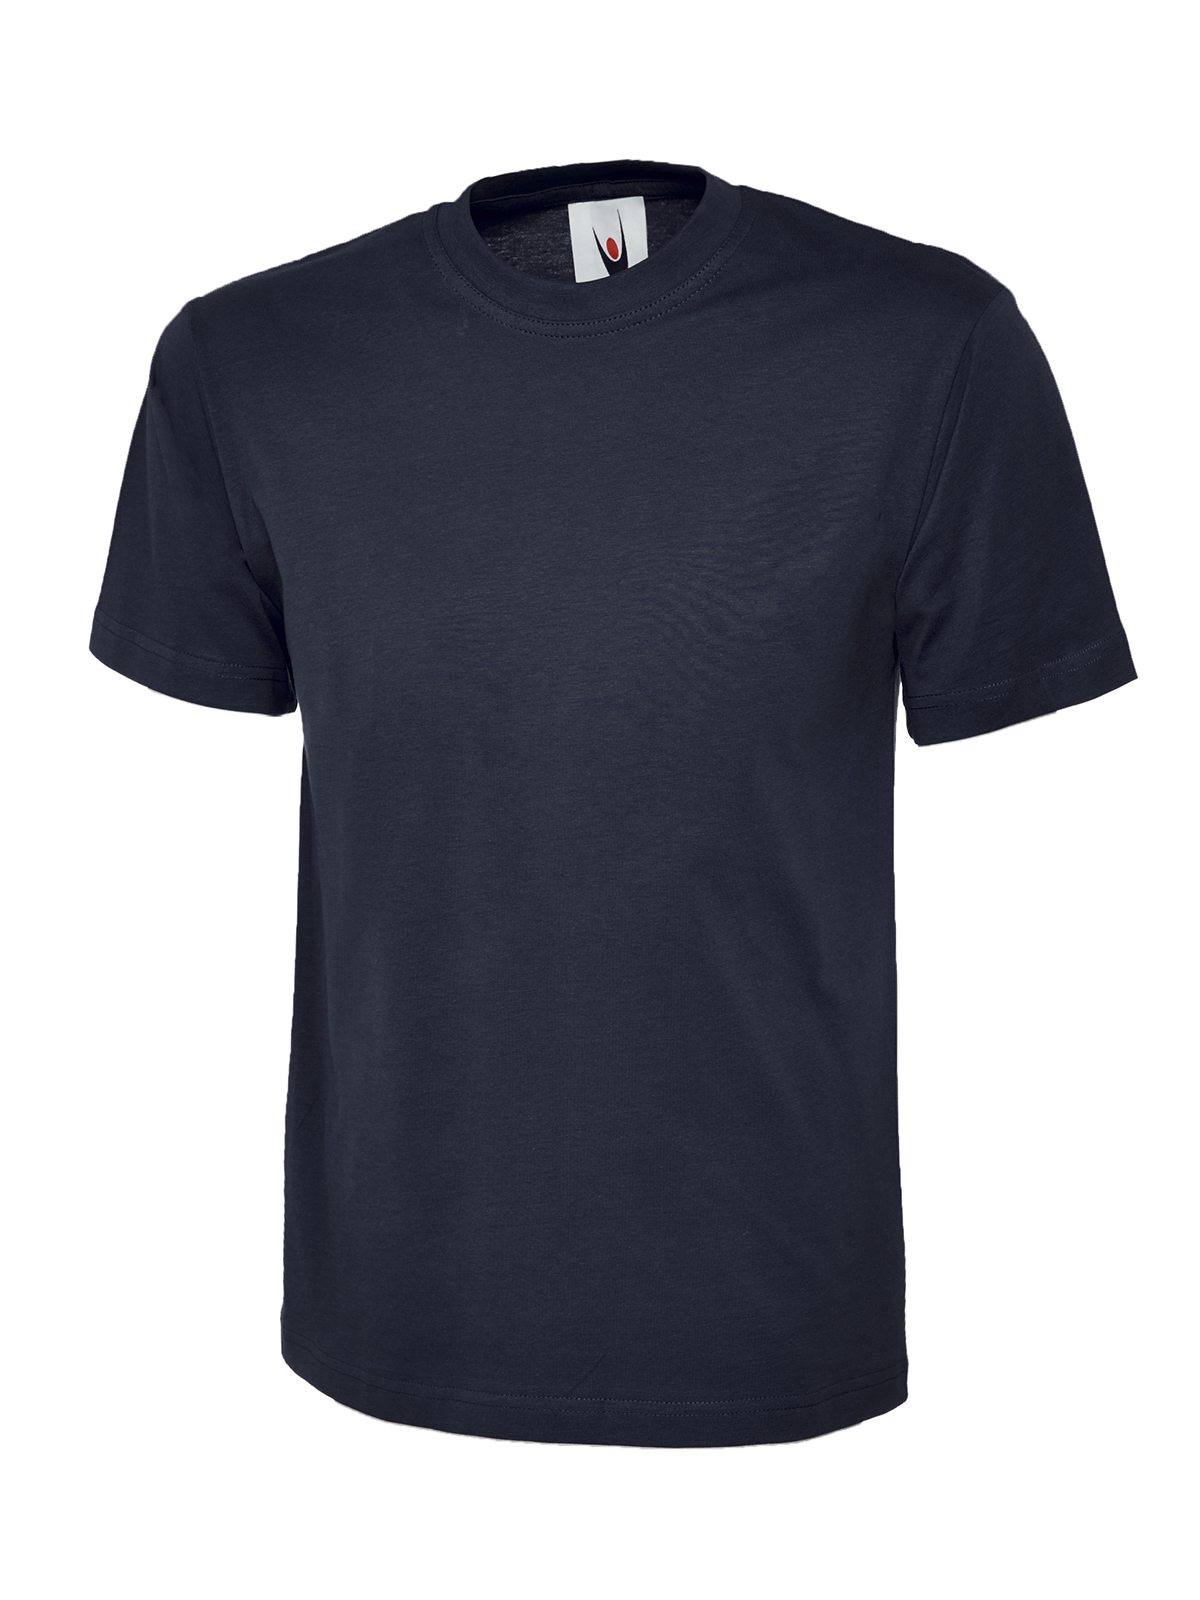 T-shirt, Navy - Size 4XL